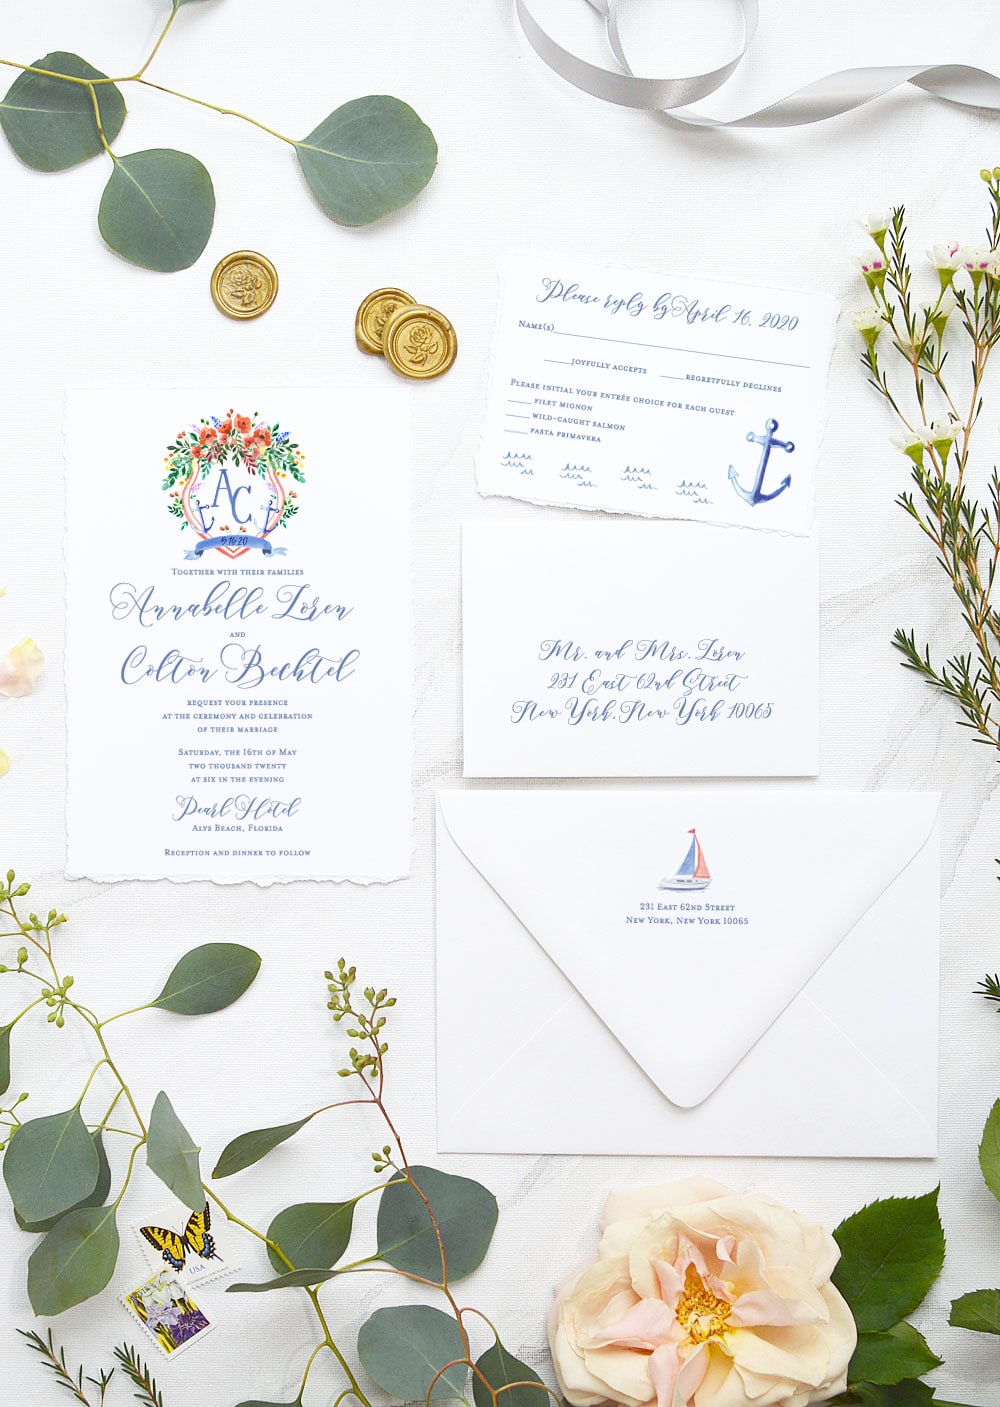 27 Sea-worthy Nautical Wedding Invitations. Nautical wedding invitations with watercolor wedding crest, anchors, sailboat by artist Michelle Mospens. | Mospens Studio